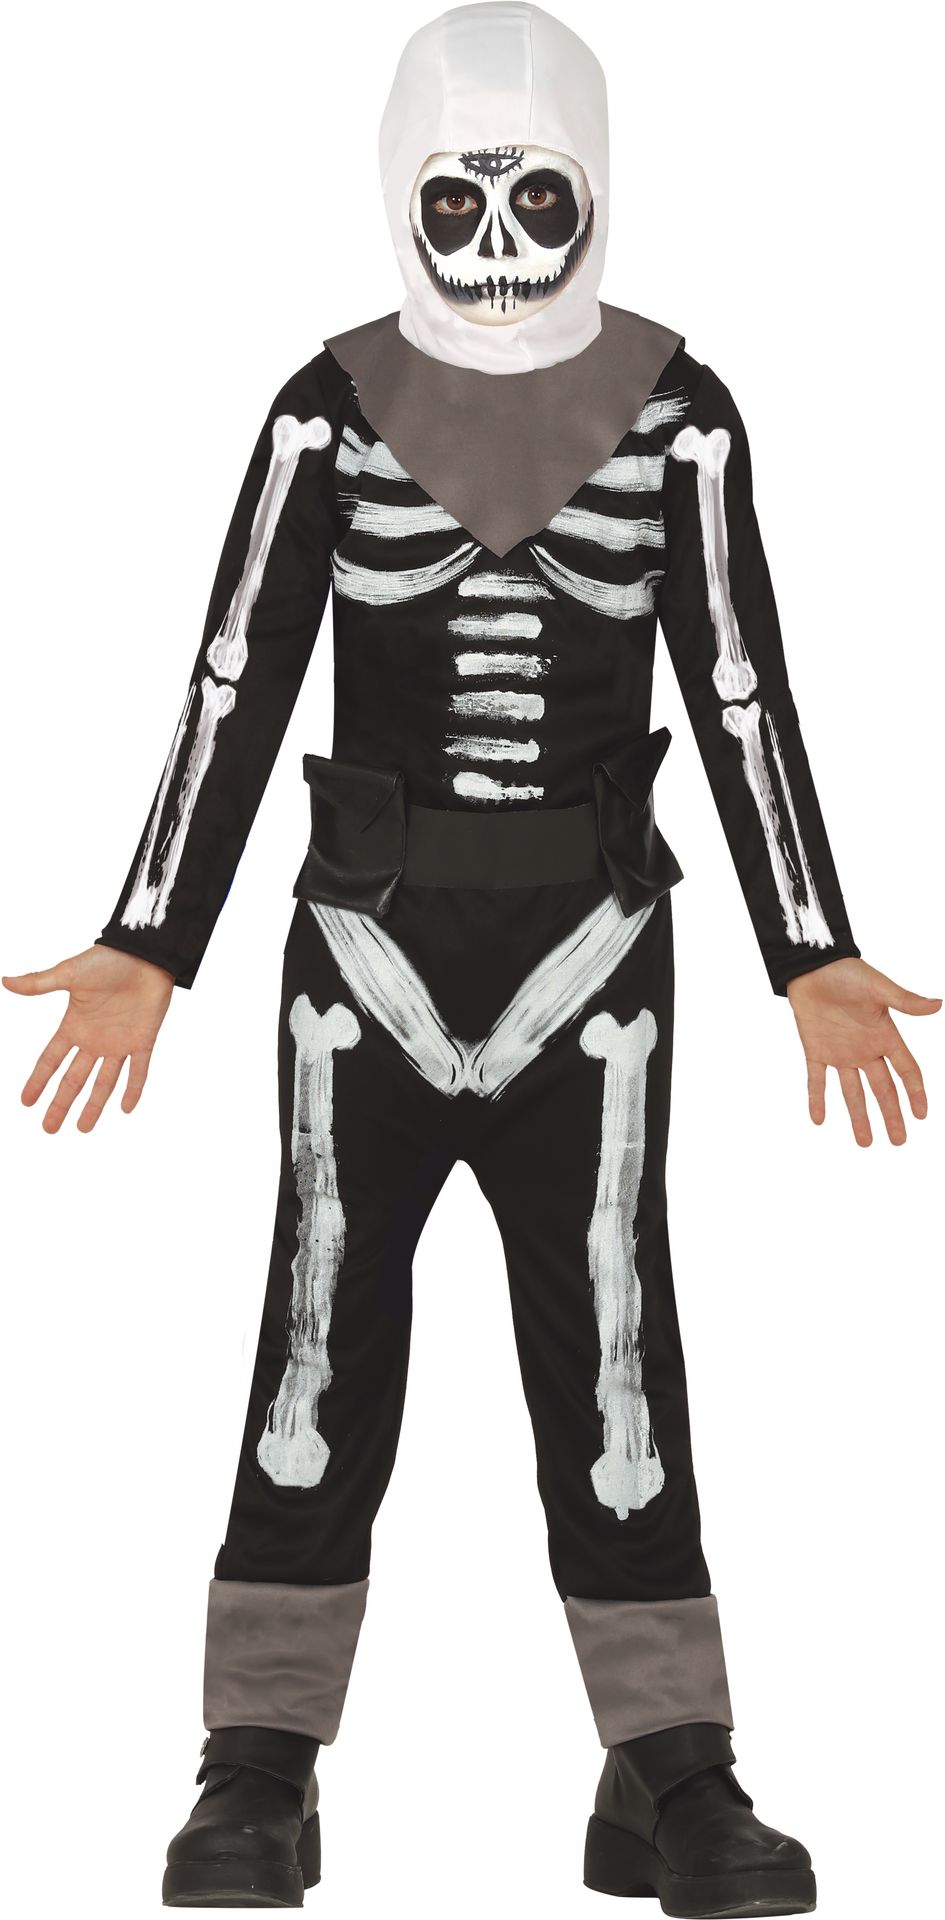 Kind skelet outfit